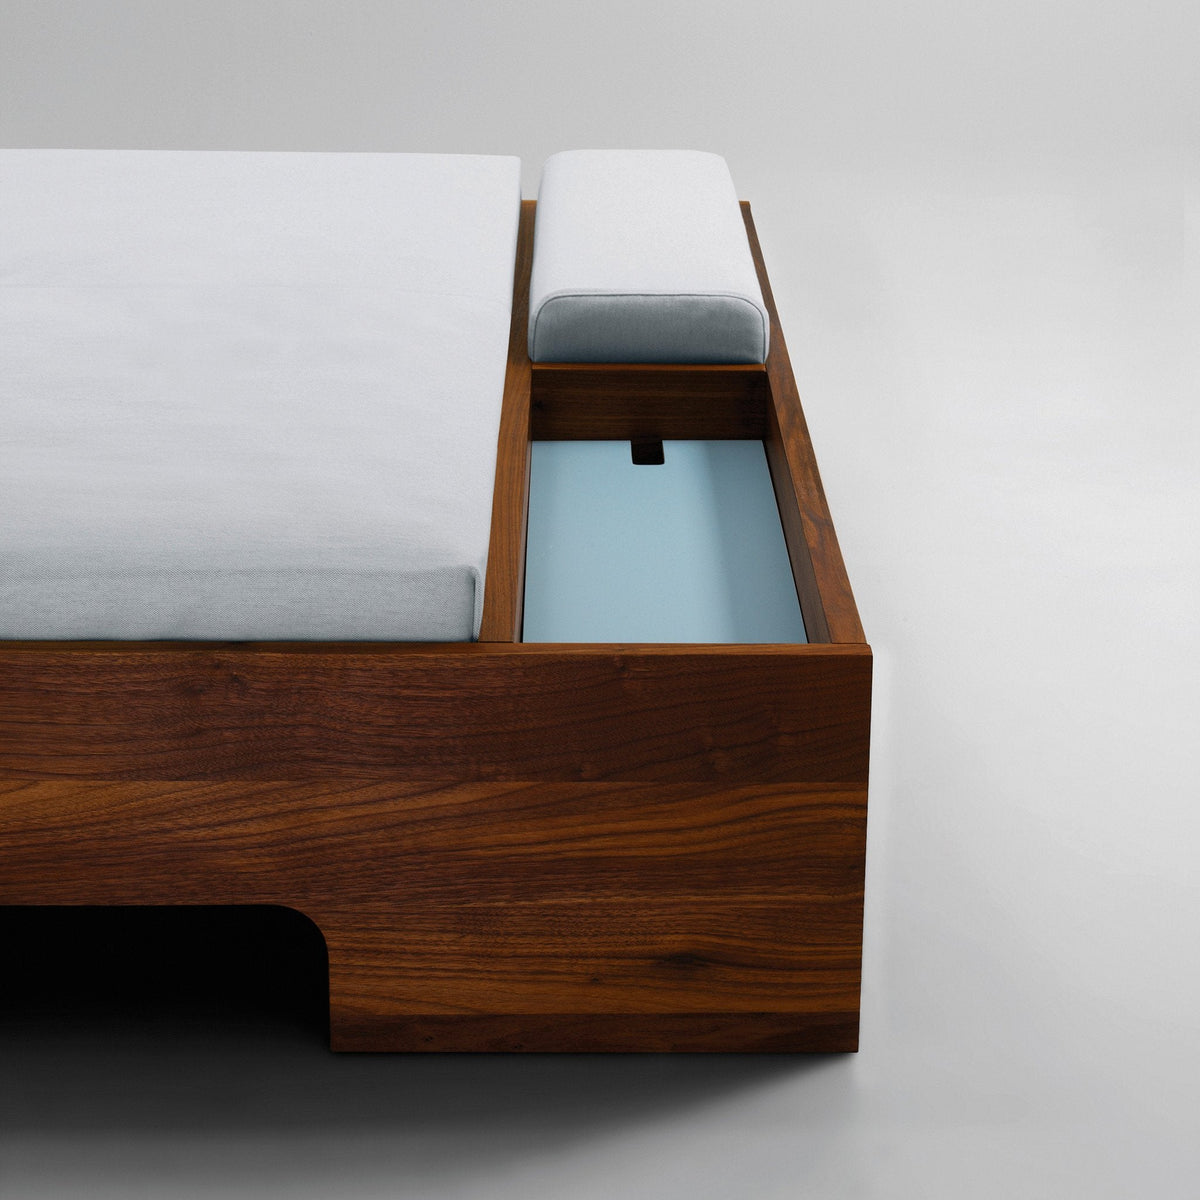 Doze Double Bed-Zeitraum-Contract Furniture Store